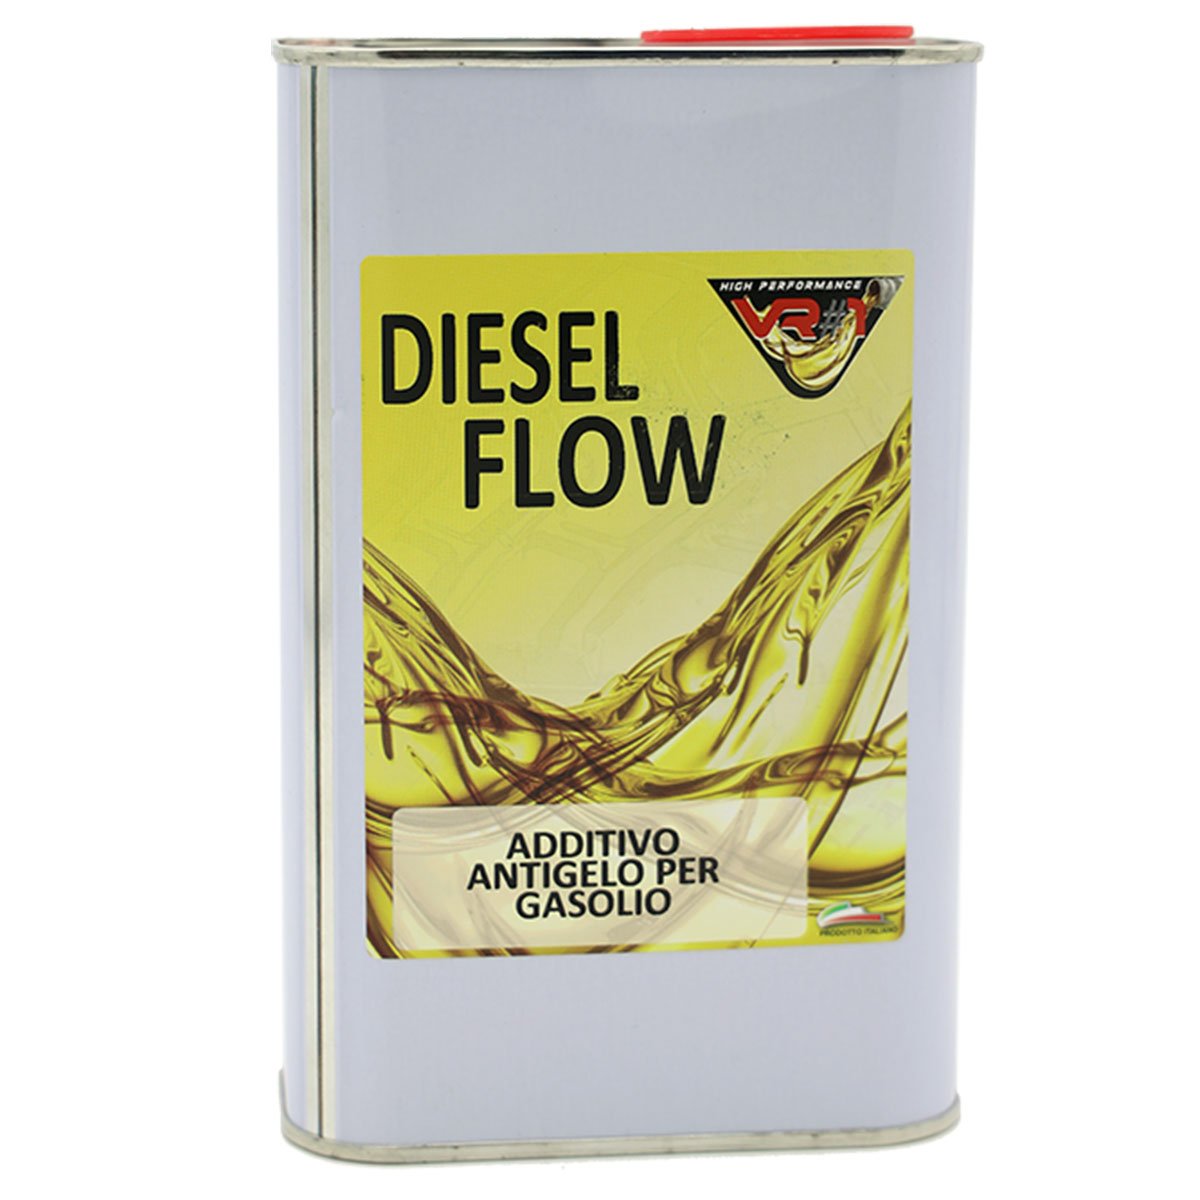 Antigelo diesel: additivo anticongelante per gasolio